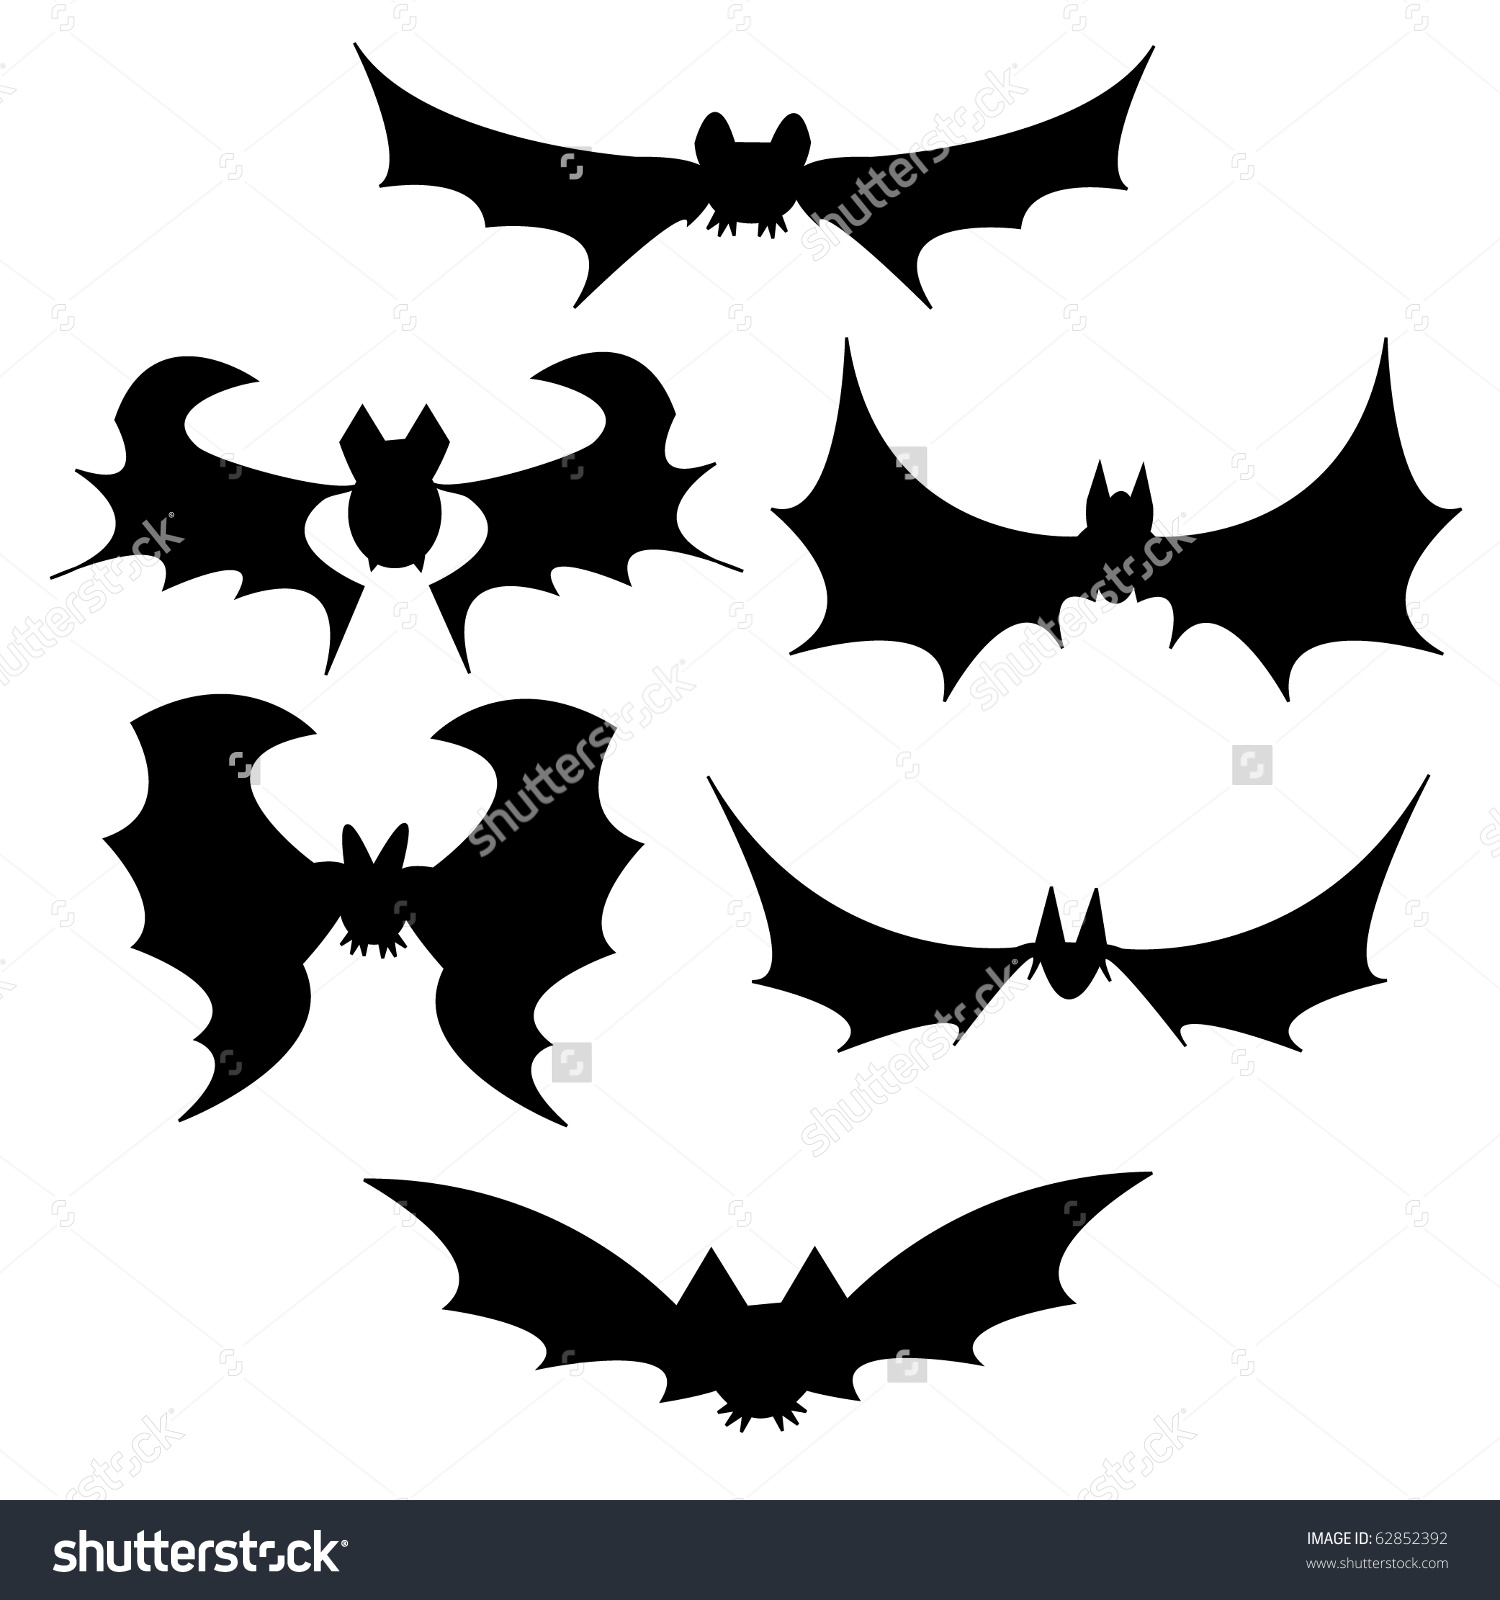 Nice Images Collection: Black Bat Desktop Wallpapers